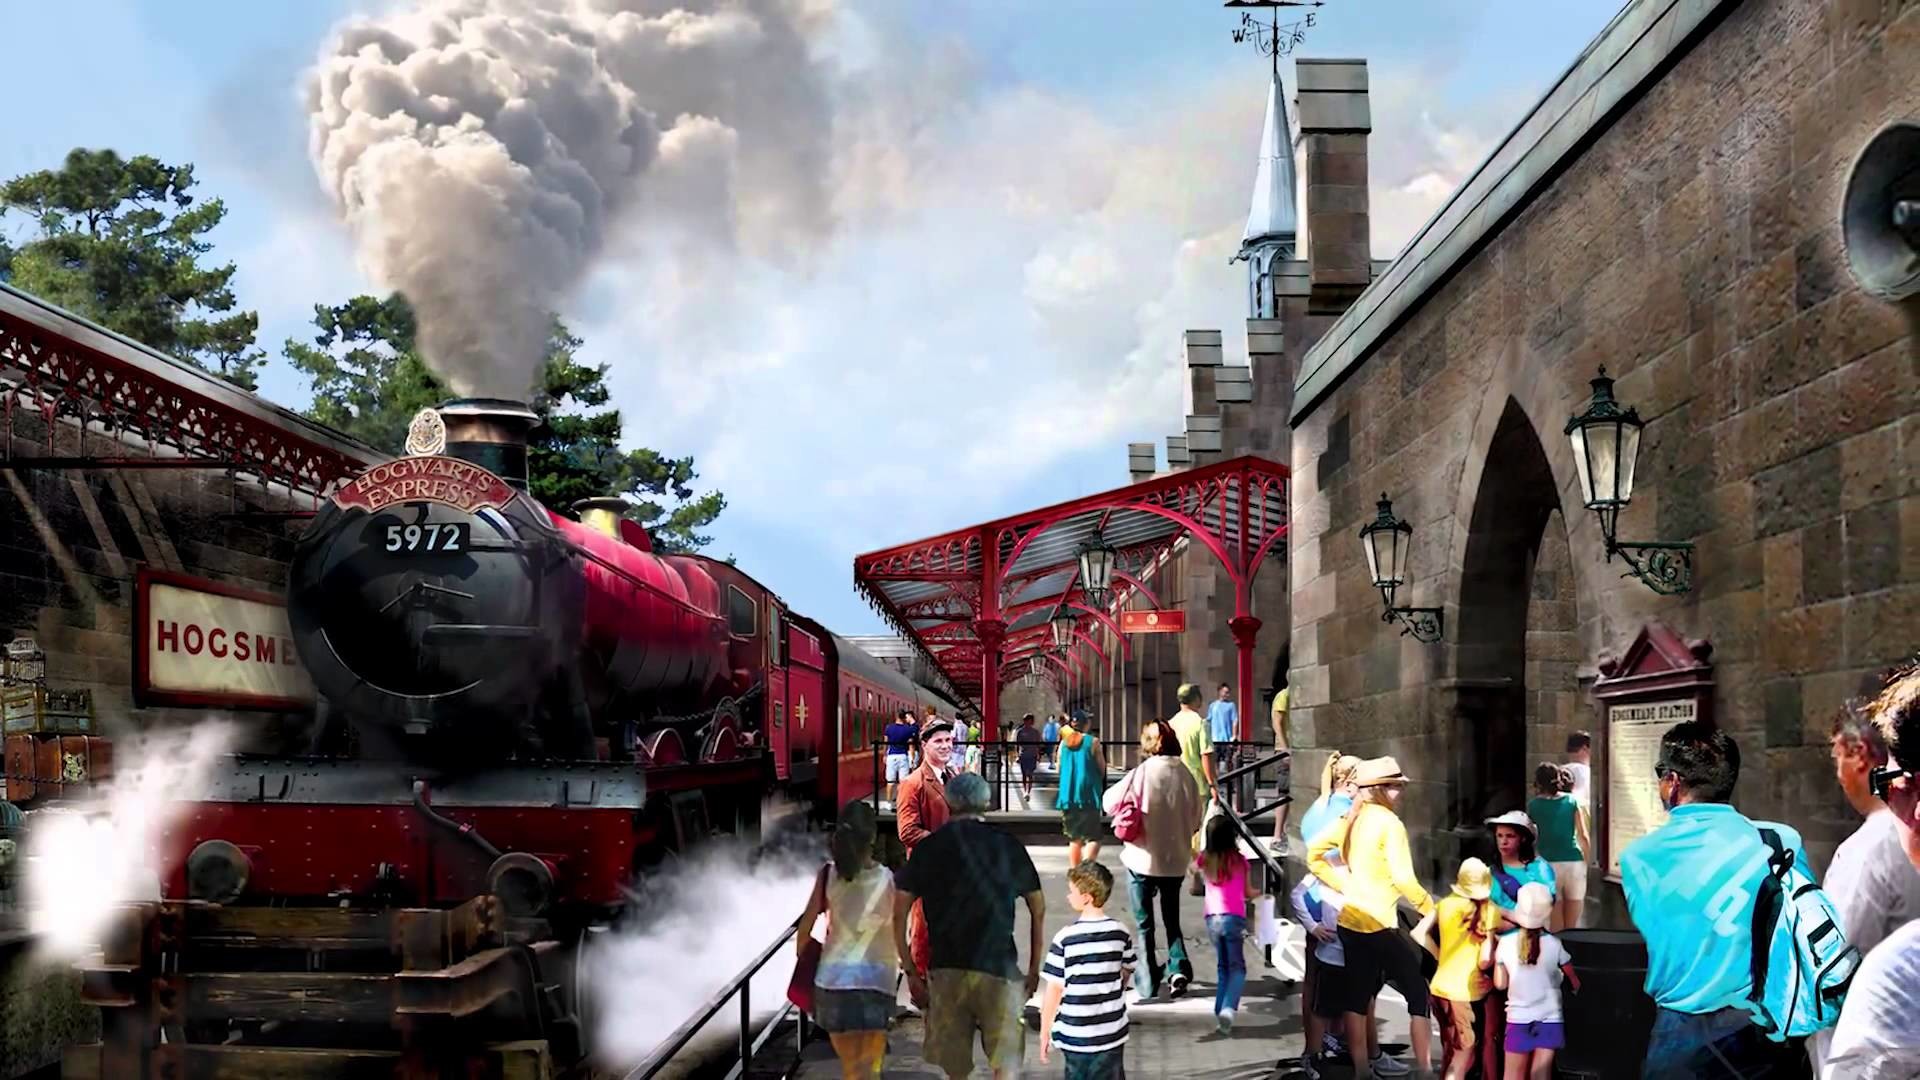 1920x1080 Hogwarts Express - Behind the Scenes | Universal Orlando